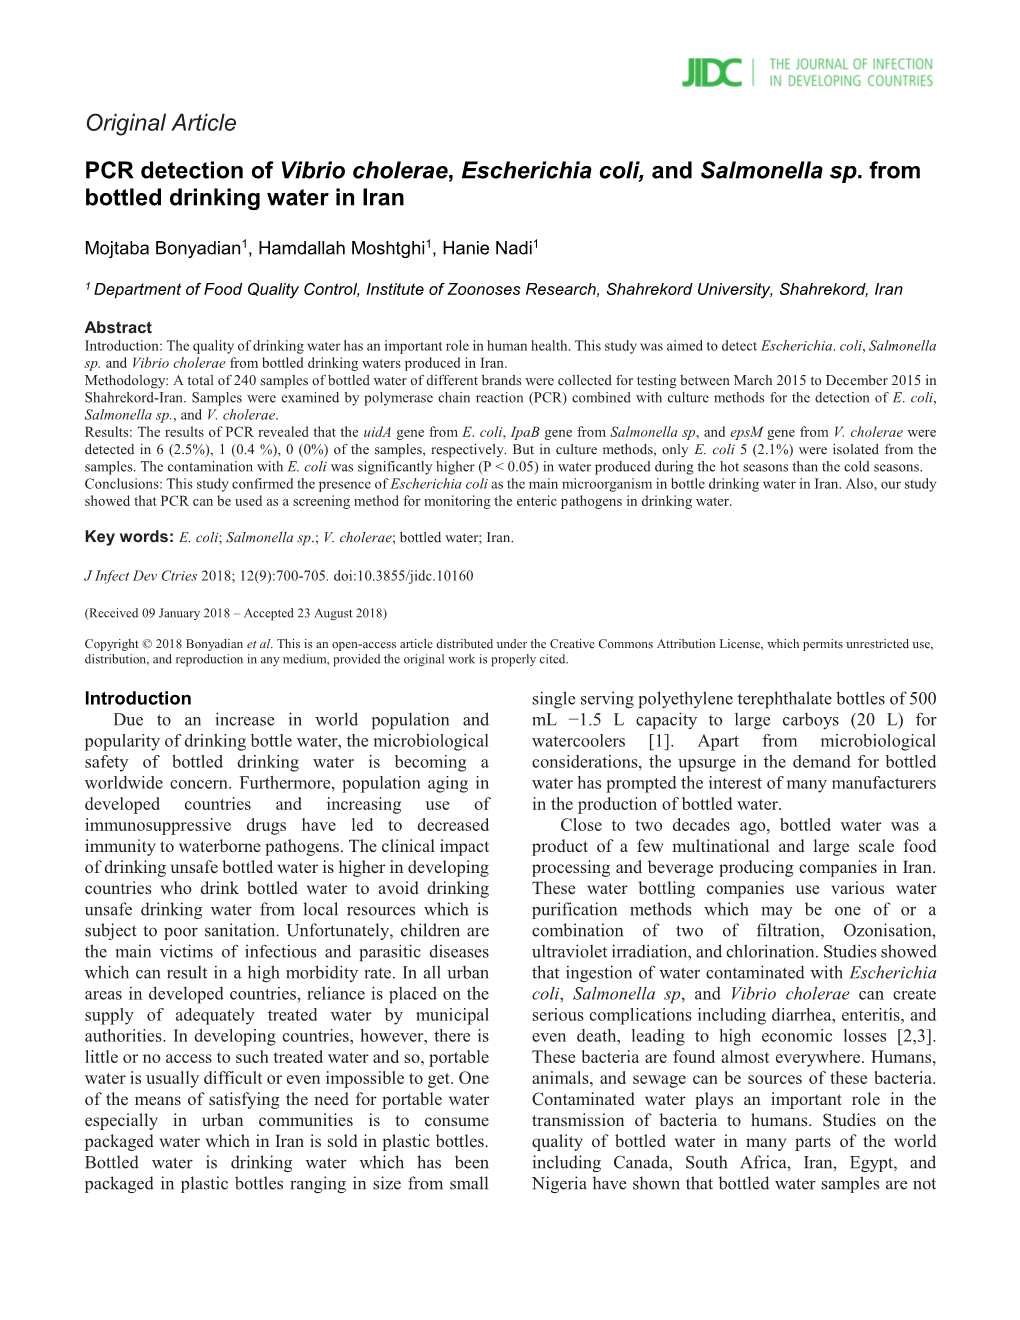 Original Article PCR Detection of Vibrio Cholerae, Escherichia Coli